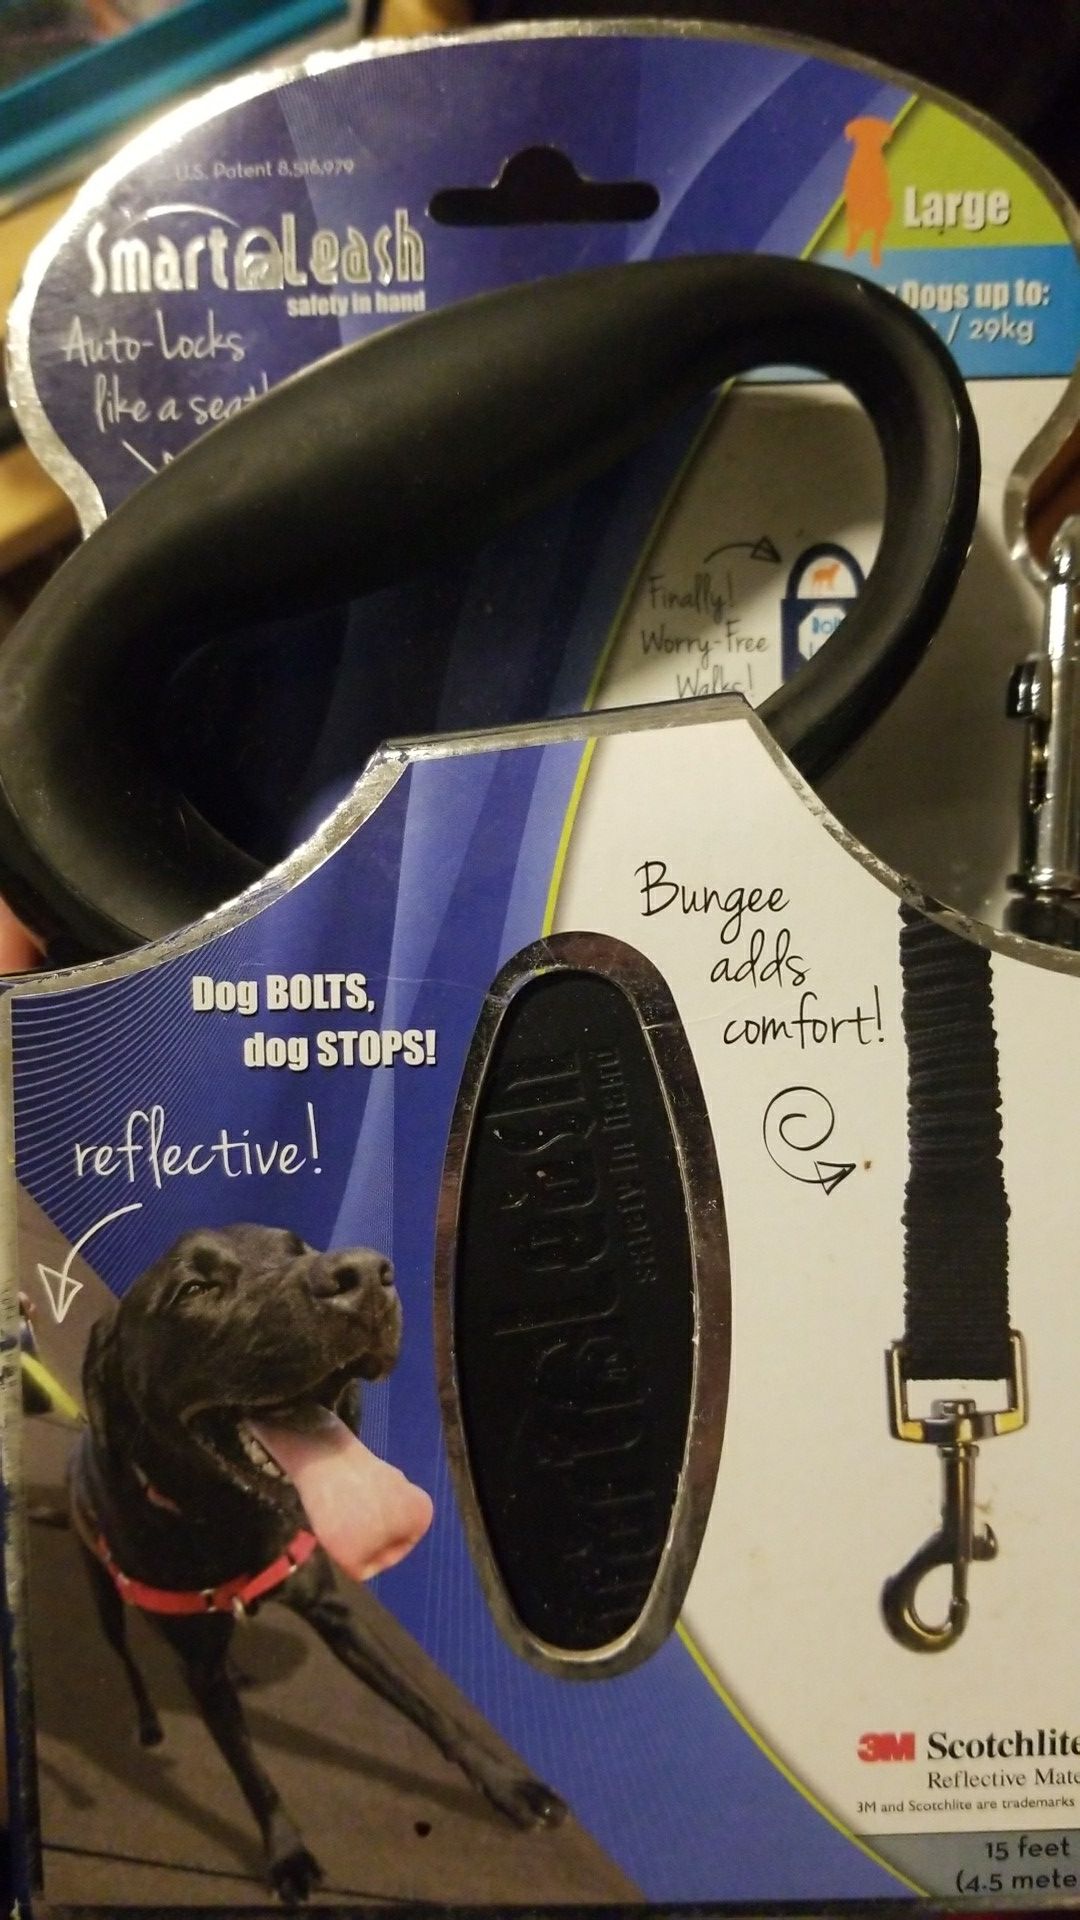 Brand new "smart leash" dog leash